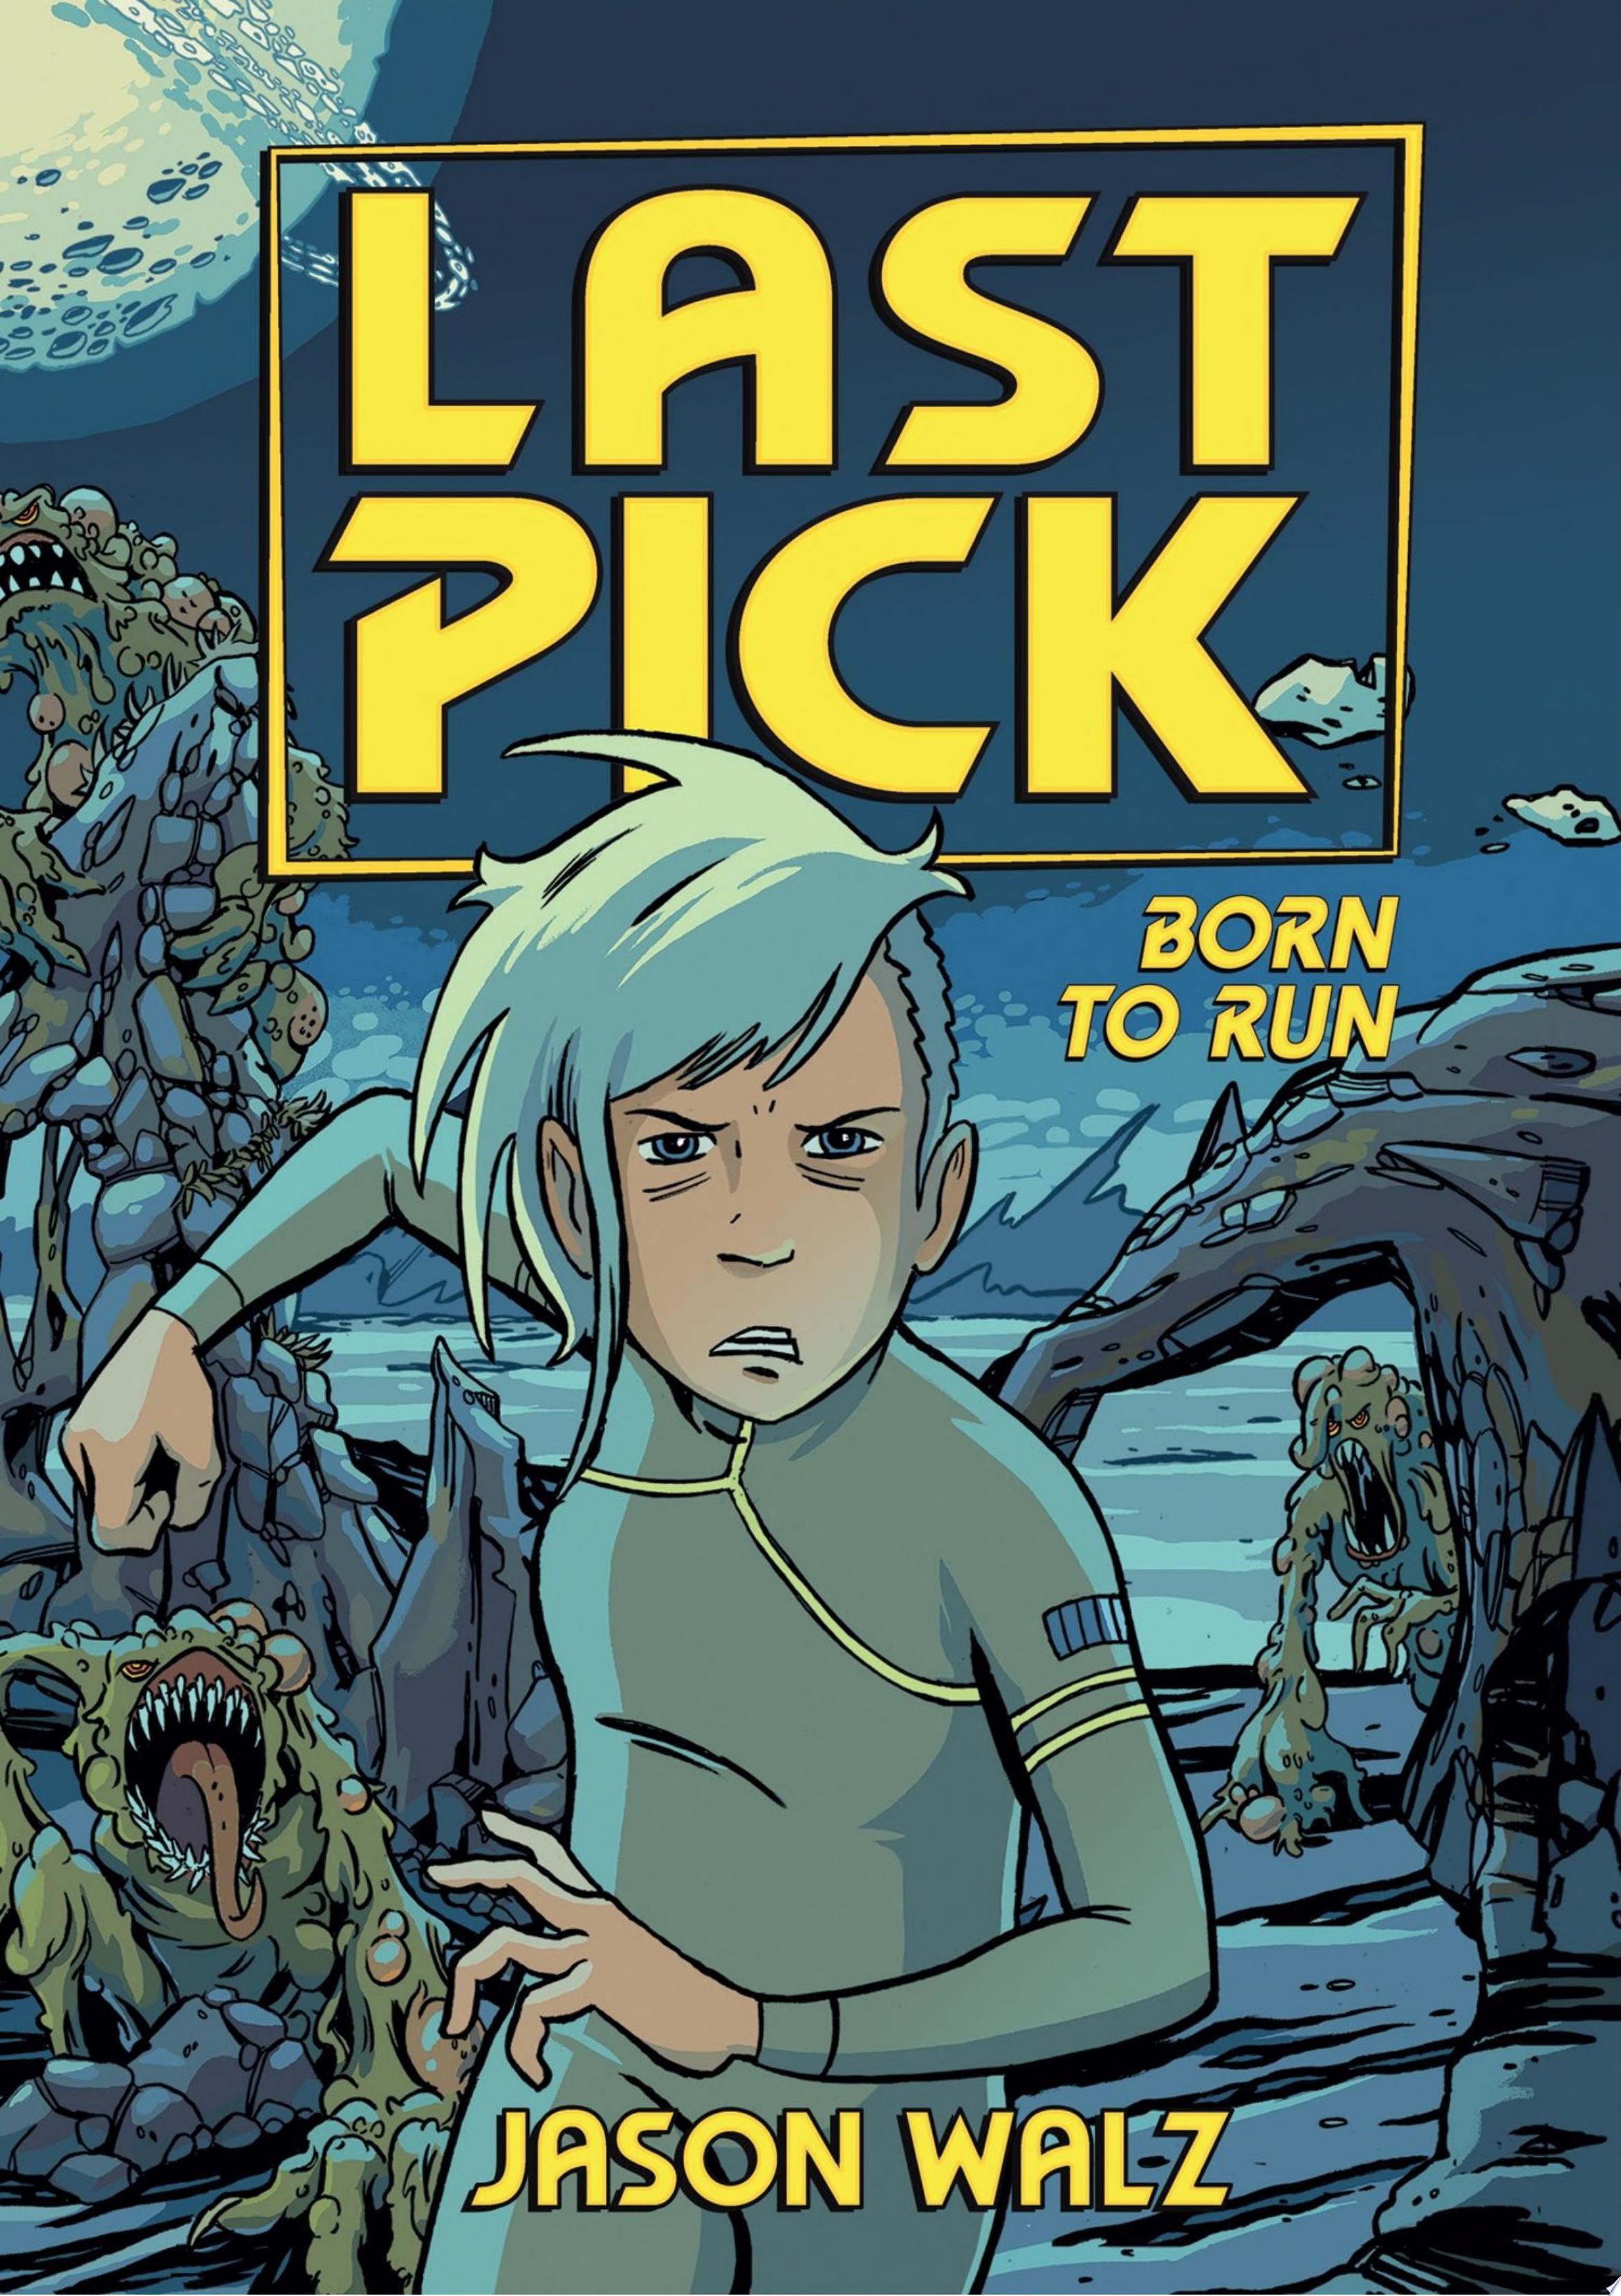 Image for "Last Pick: Born to Run"